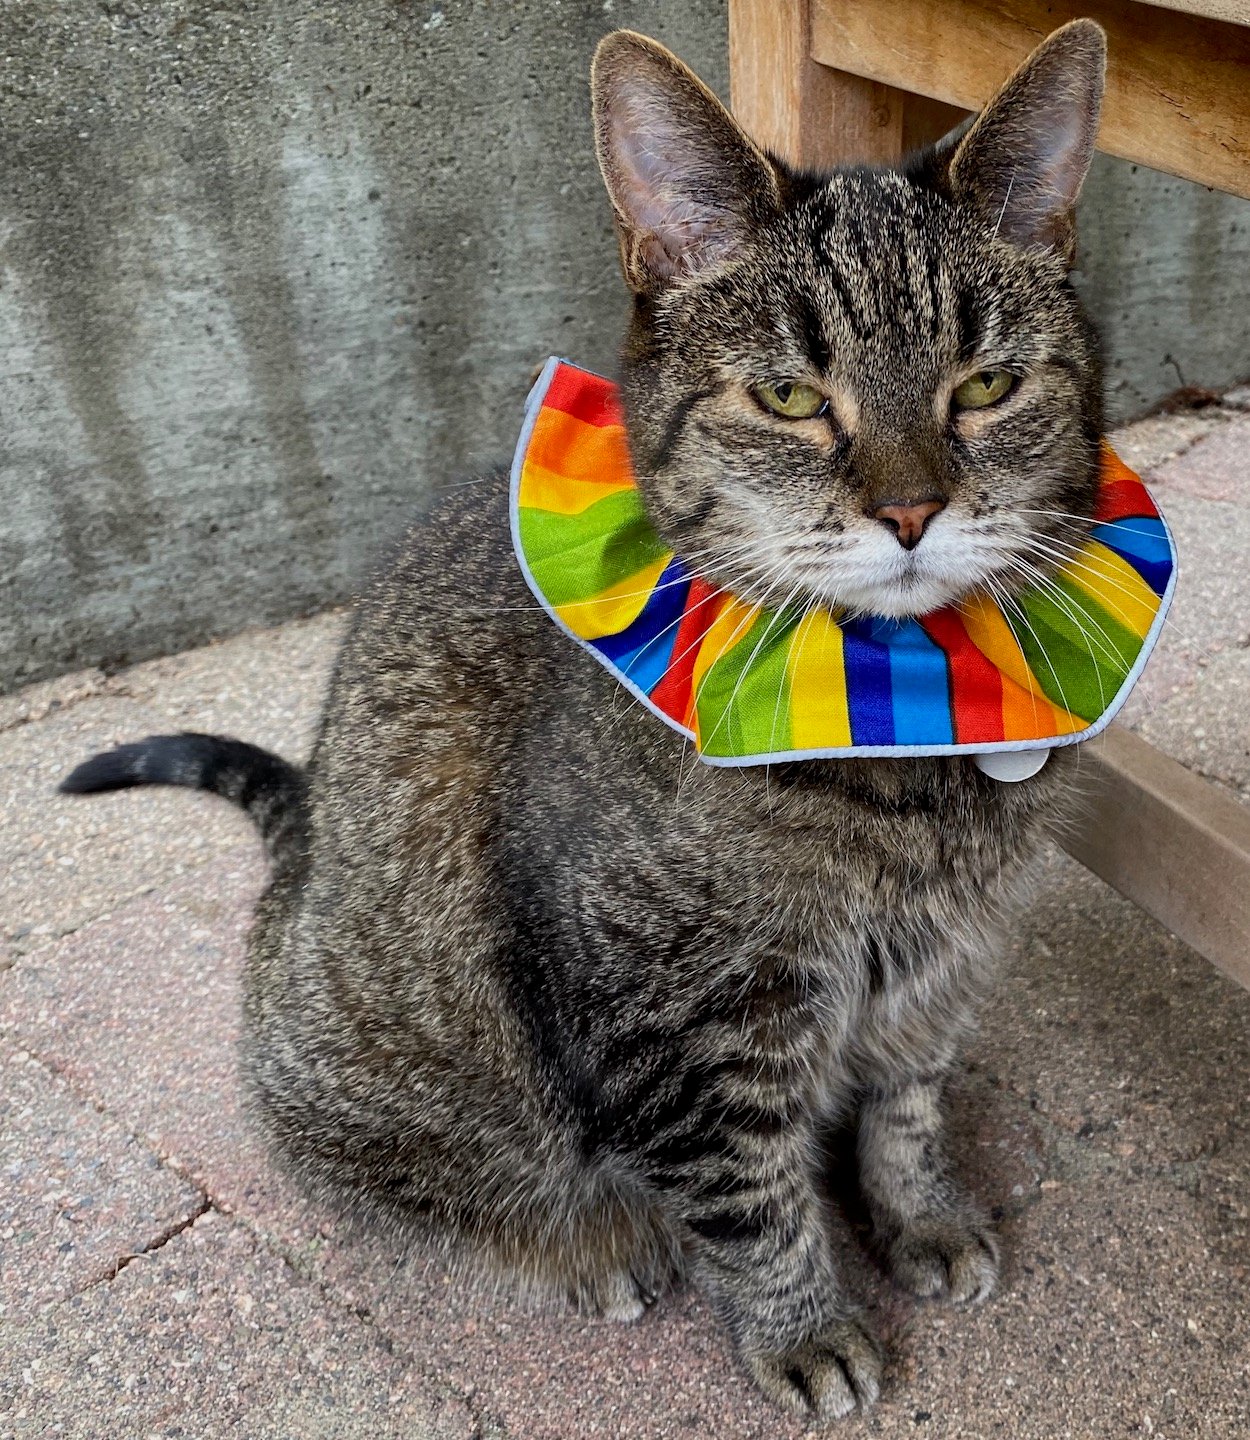 BirdSafe Cat Collar Protect Birds From Cats With This Hilarious Collar